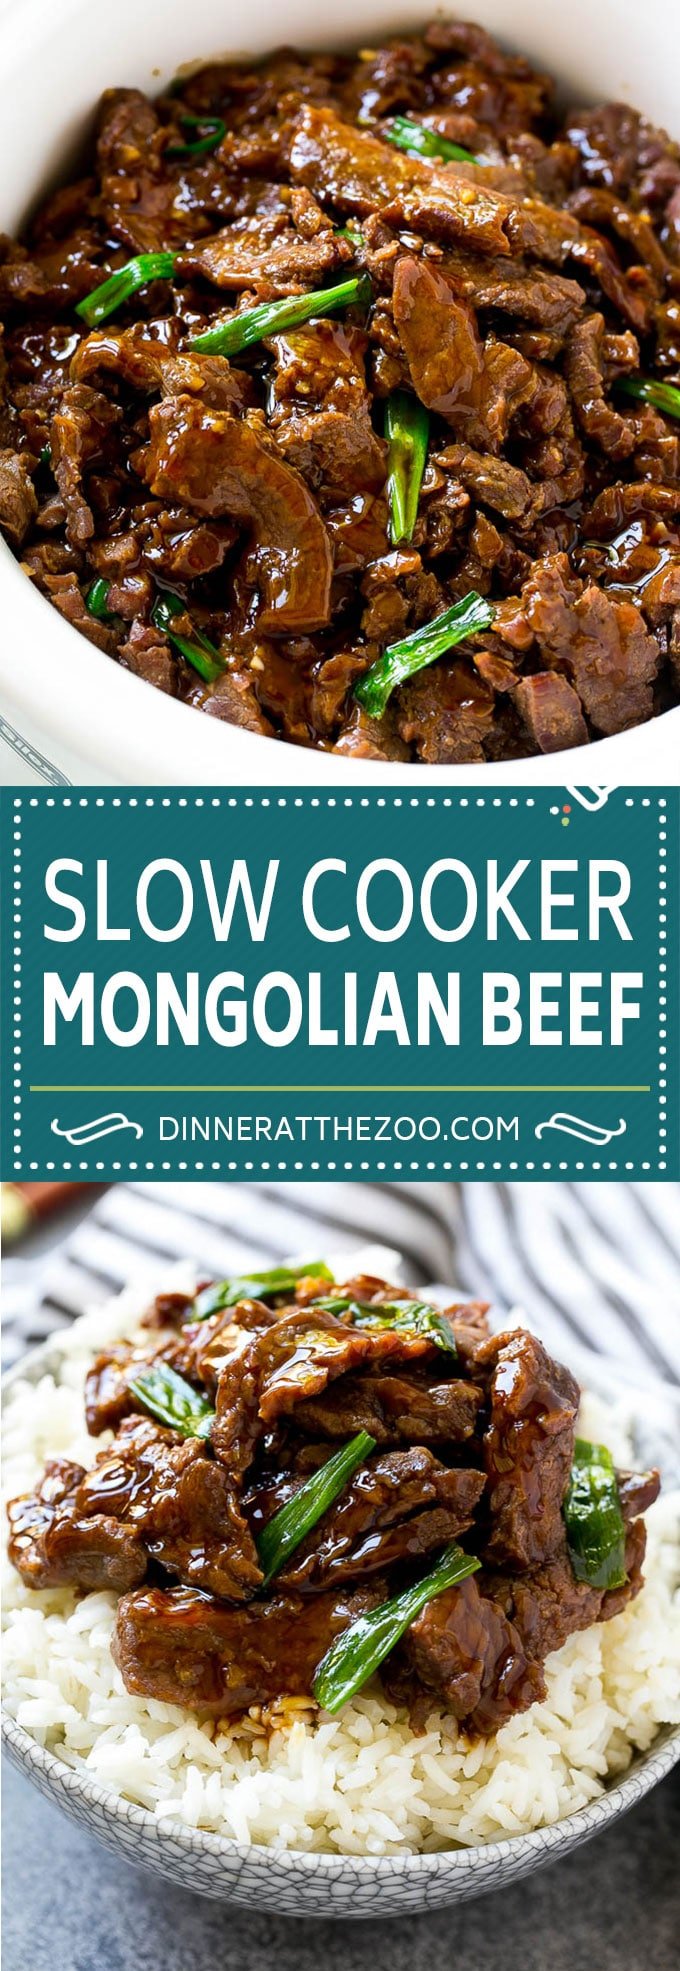 Slow Cooker Mongolian Beef Recipe | Crock Pot Mongolian Beef | Asian Beef Recipe | Slow Cooker Beef #beef #slowcooker #crockpot #asianfood #dinneratthezoo